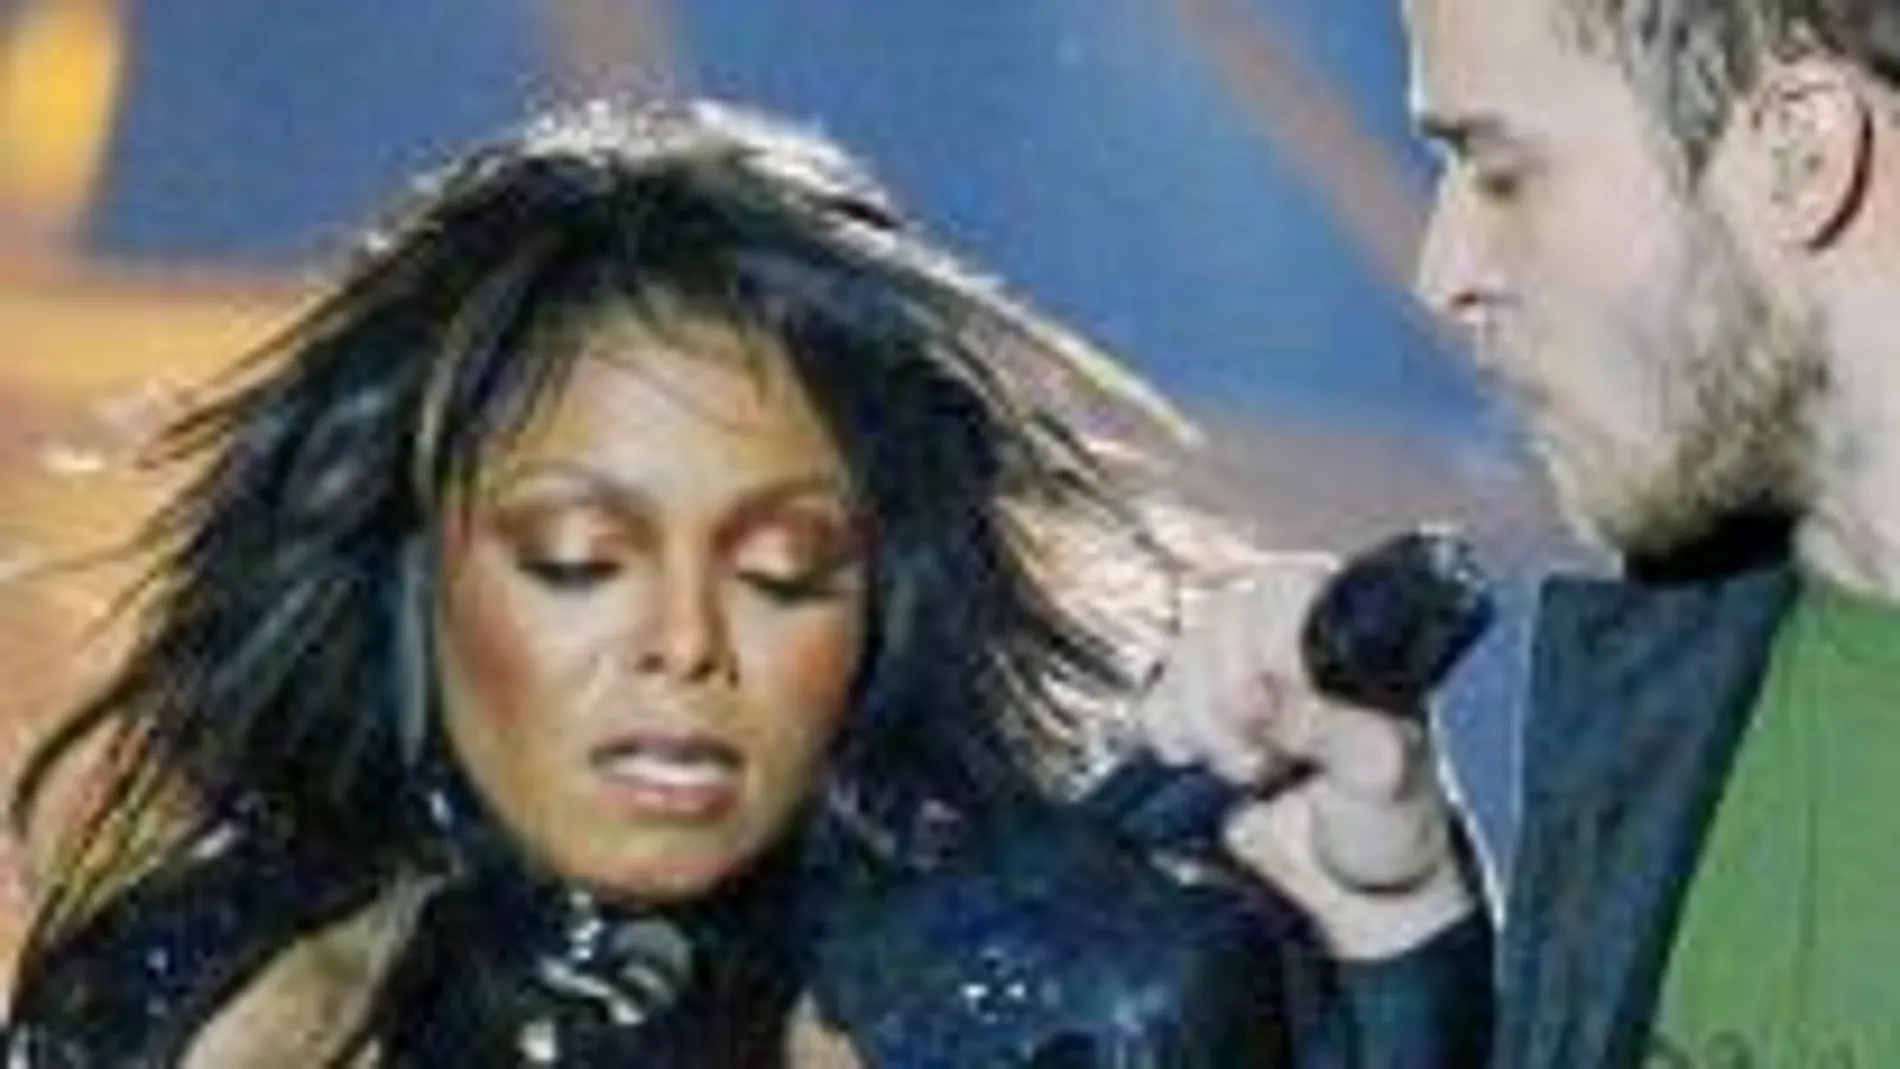 Janet Jackson y Justin Timberlake protagonizaron el «pezón-gate»